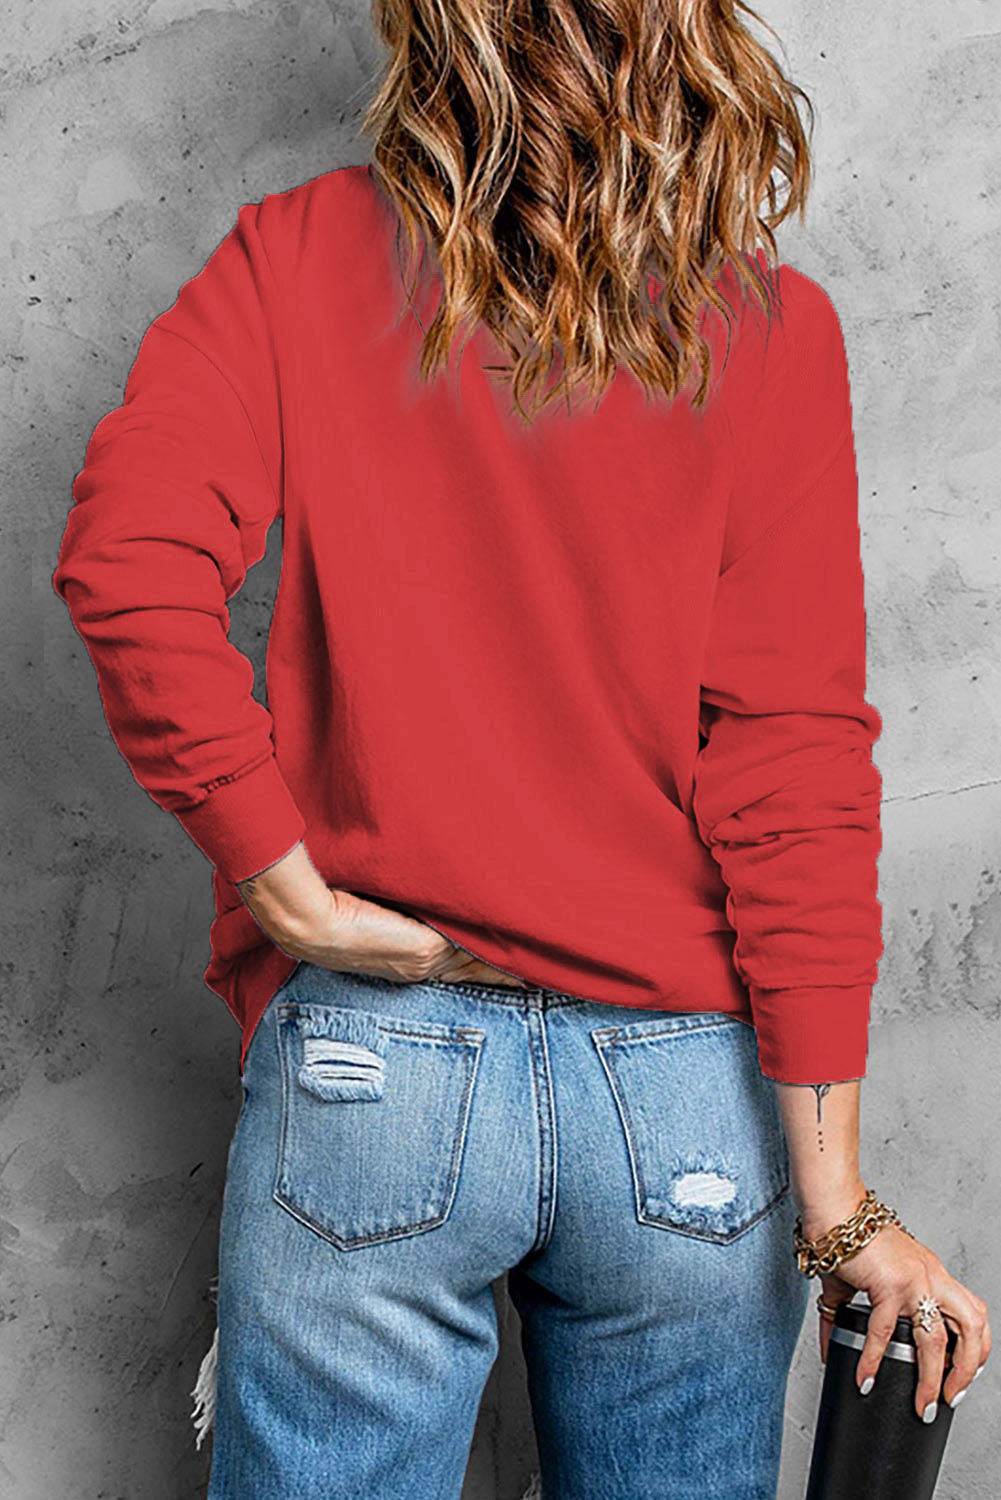 Fiery Red MERRY MAMA Long Sleeve Pullover Sweatshirt Graphic Sweatshirts JT's Designer Fashion